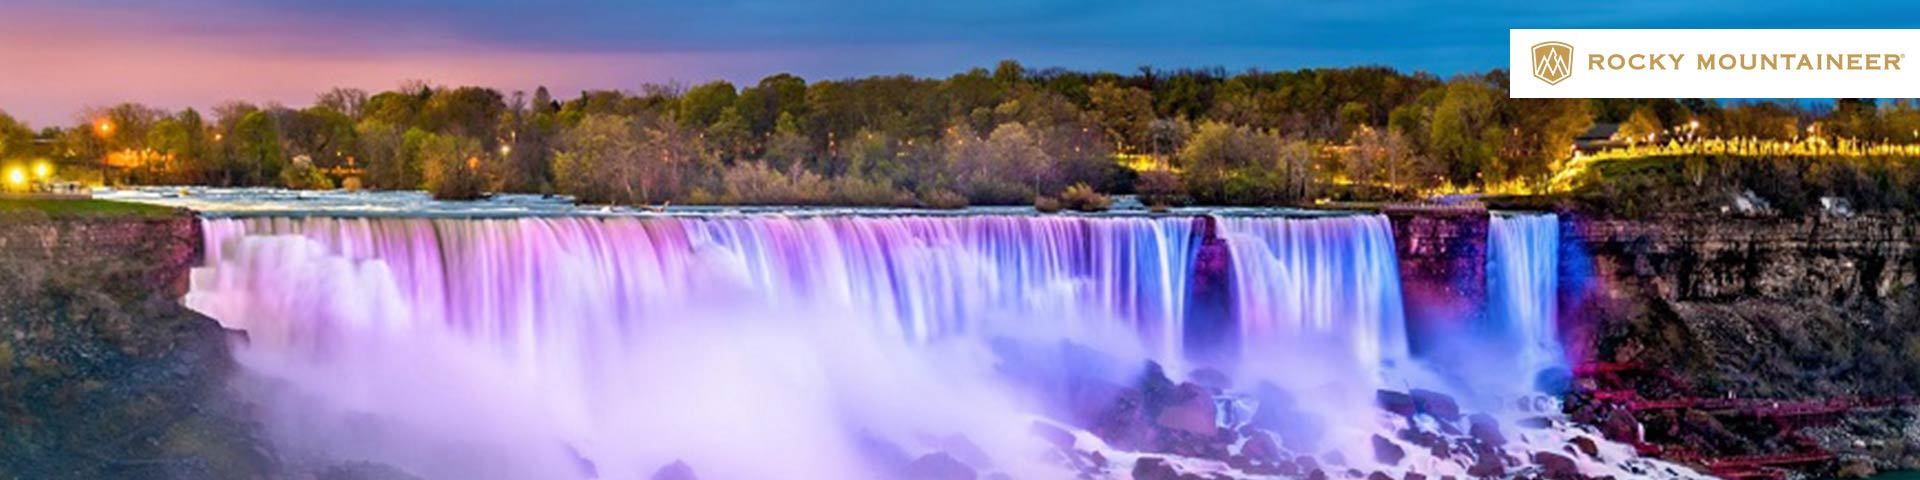 Niagra Falls Image